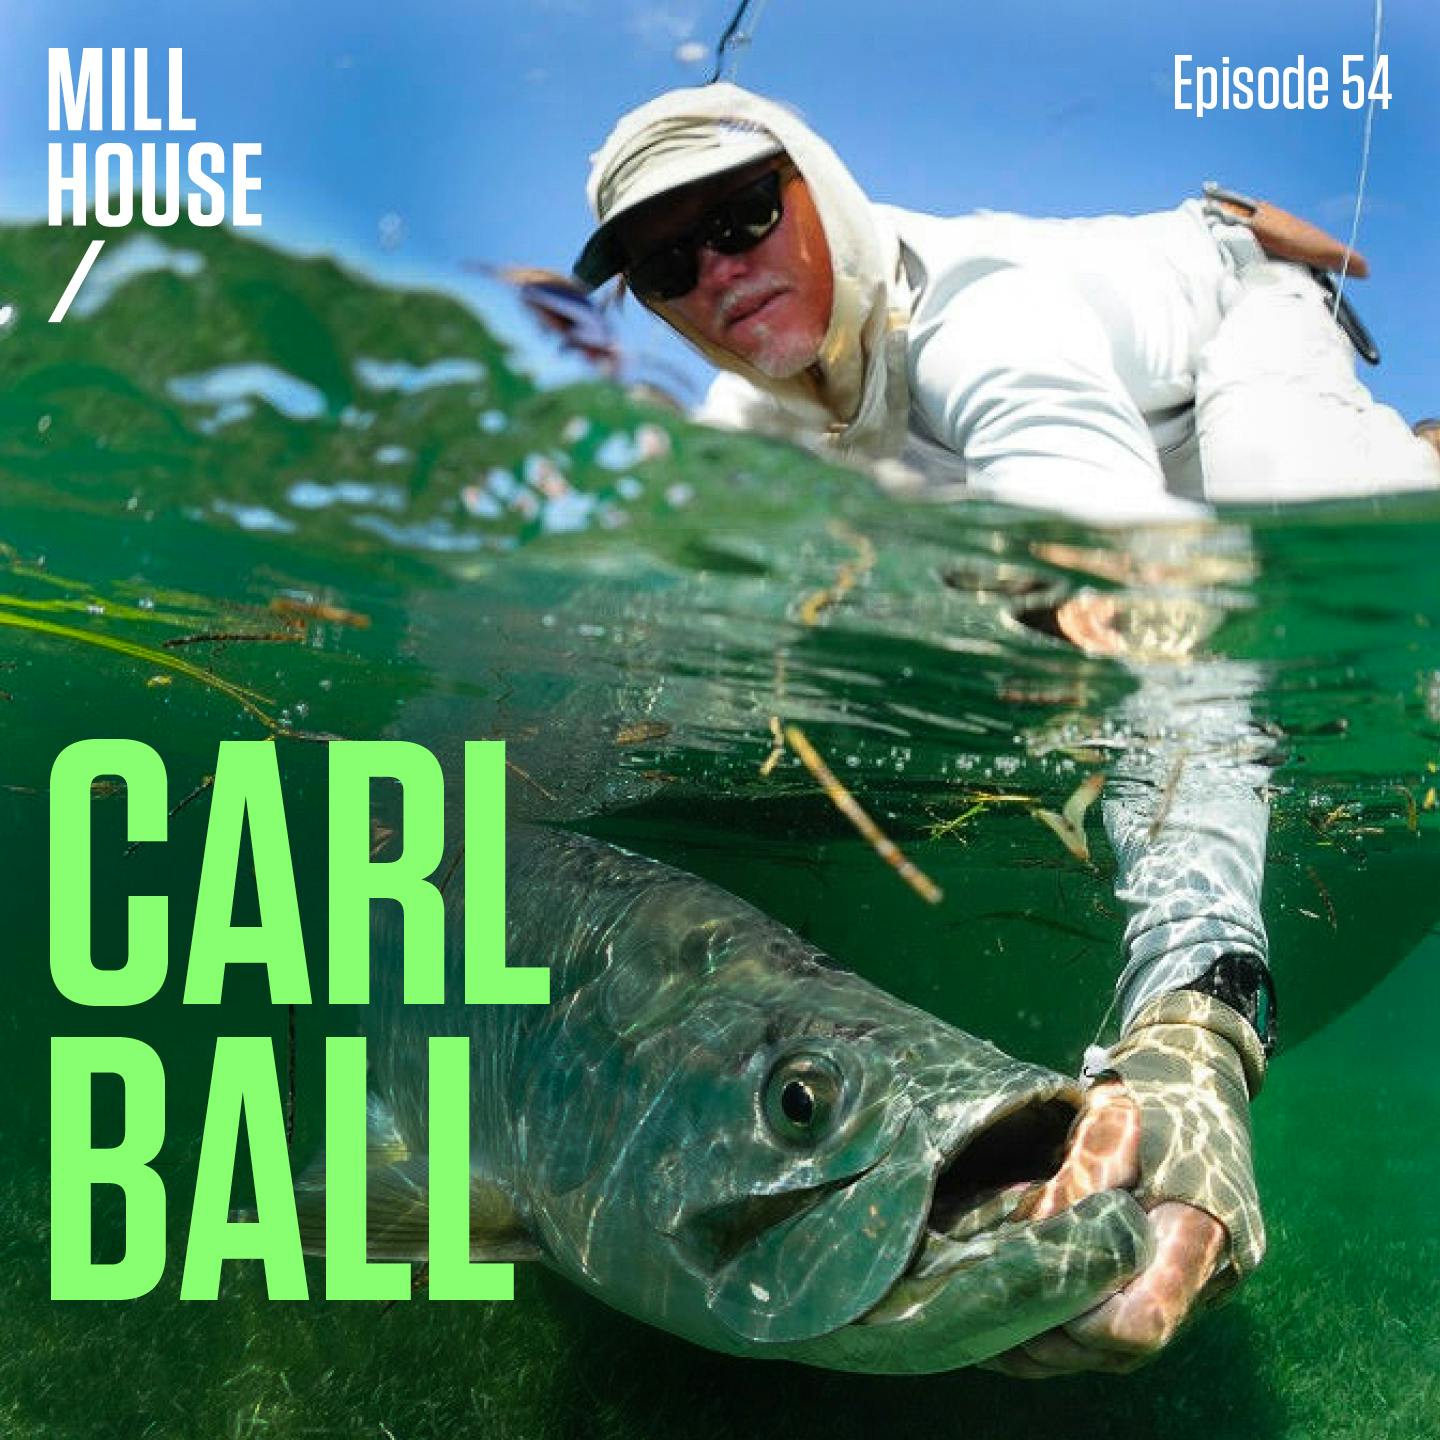 Episode 54: Capt. Carl Ball - AWOL Fishing